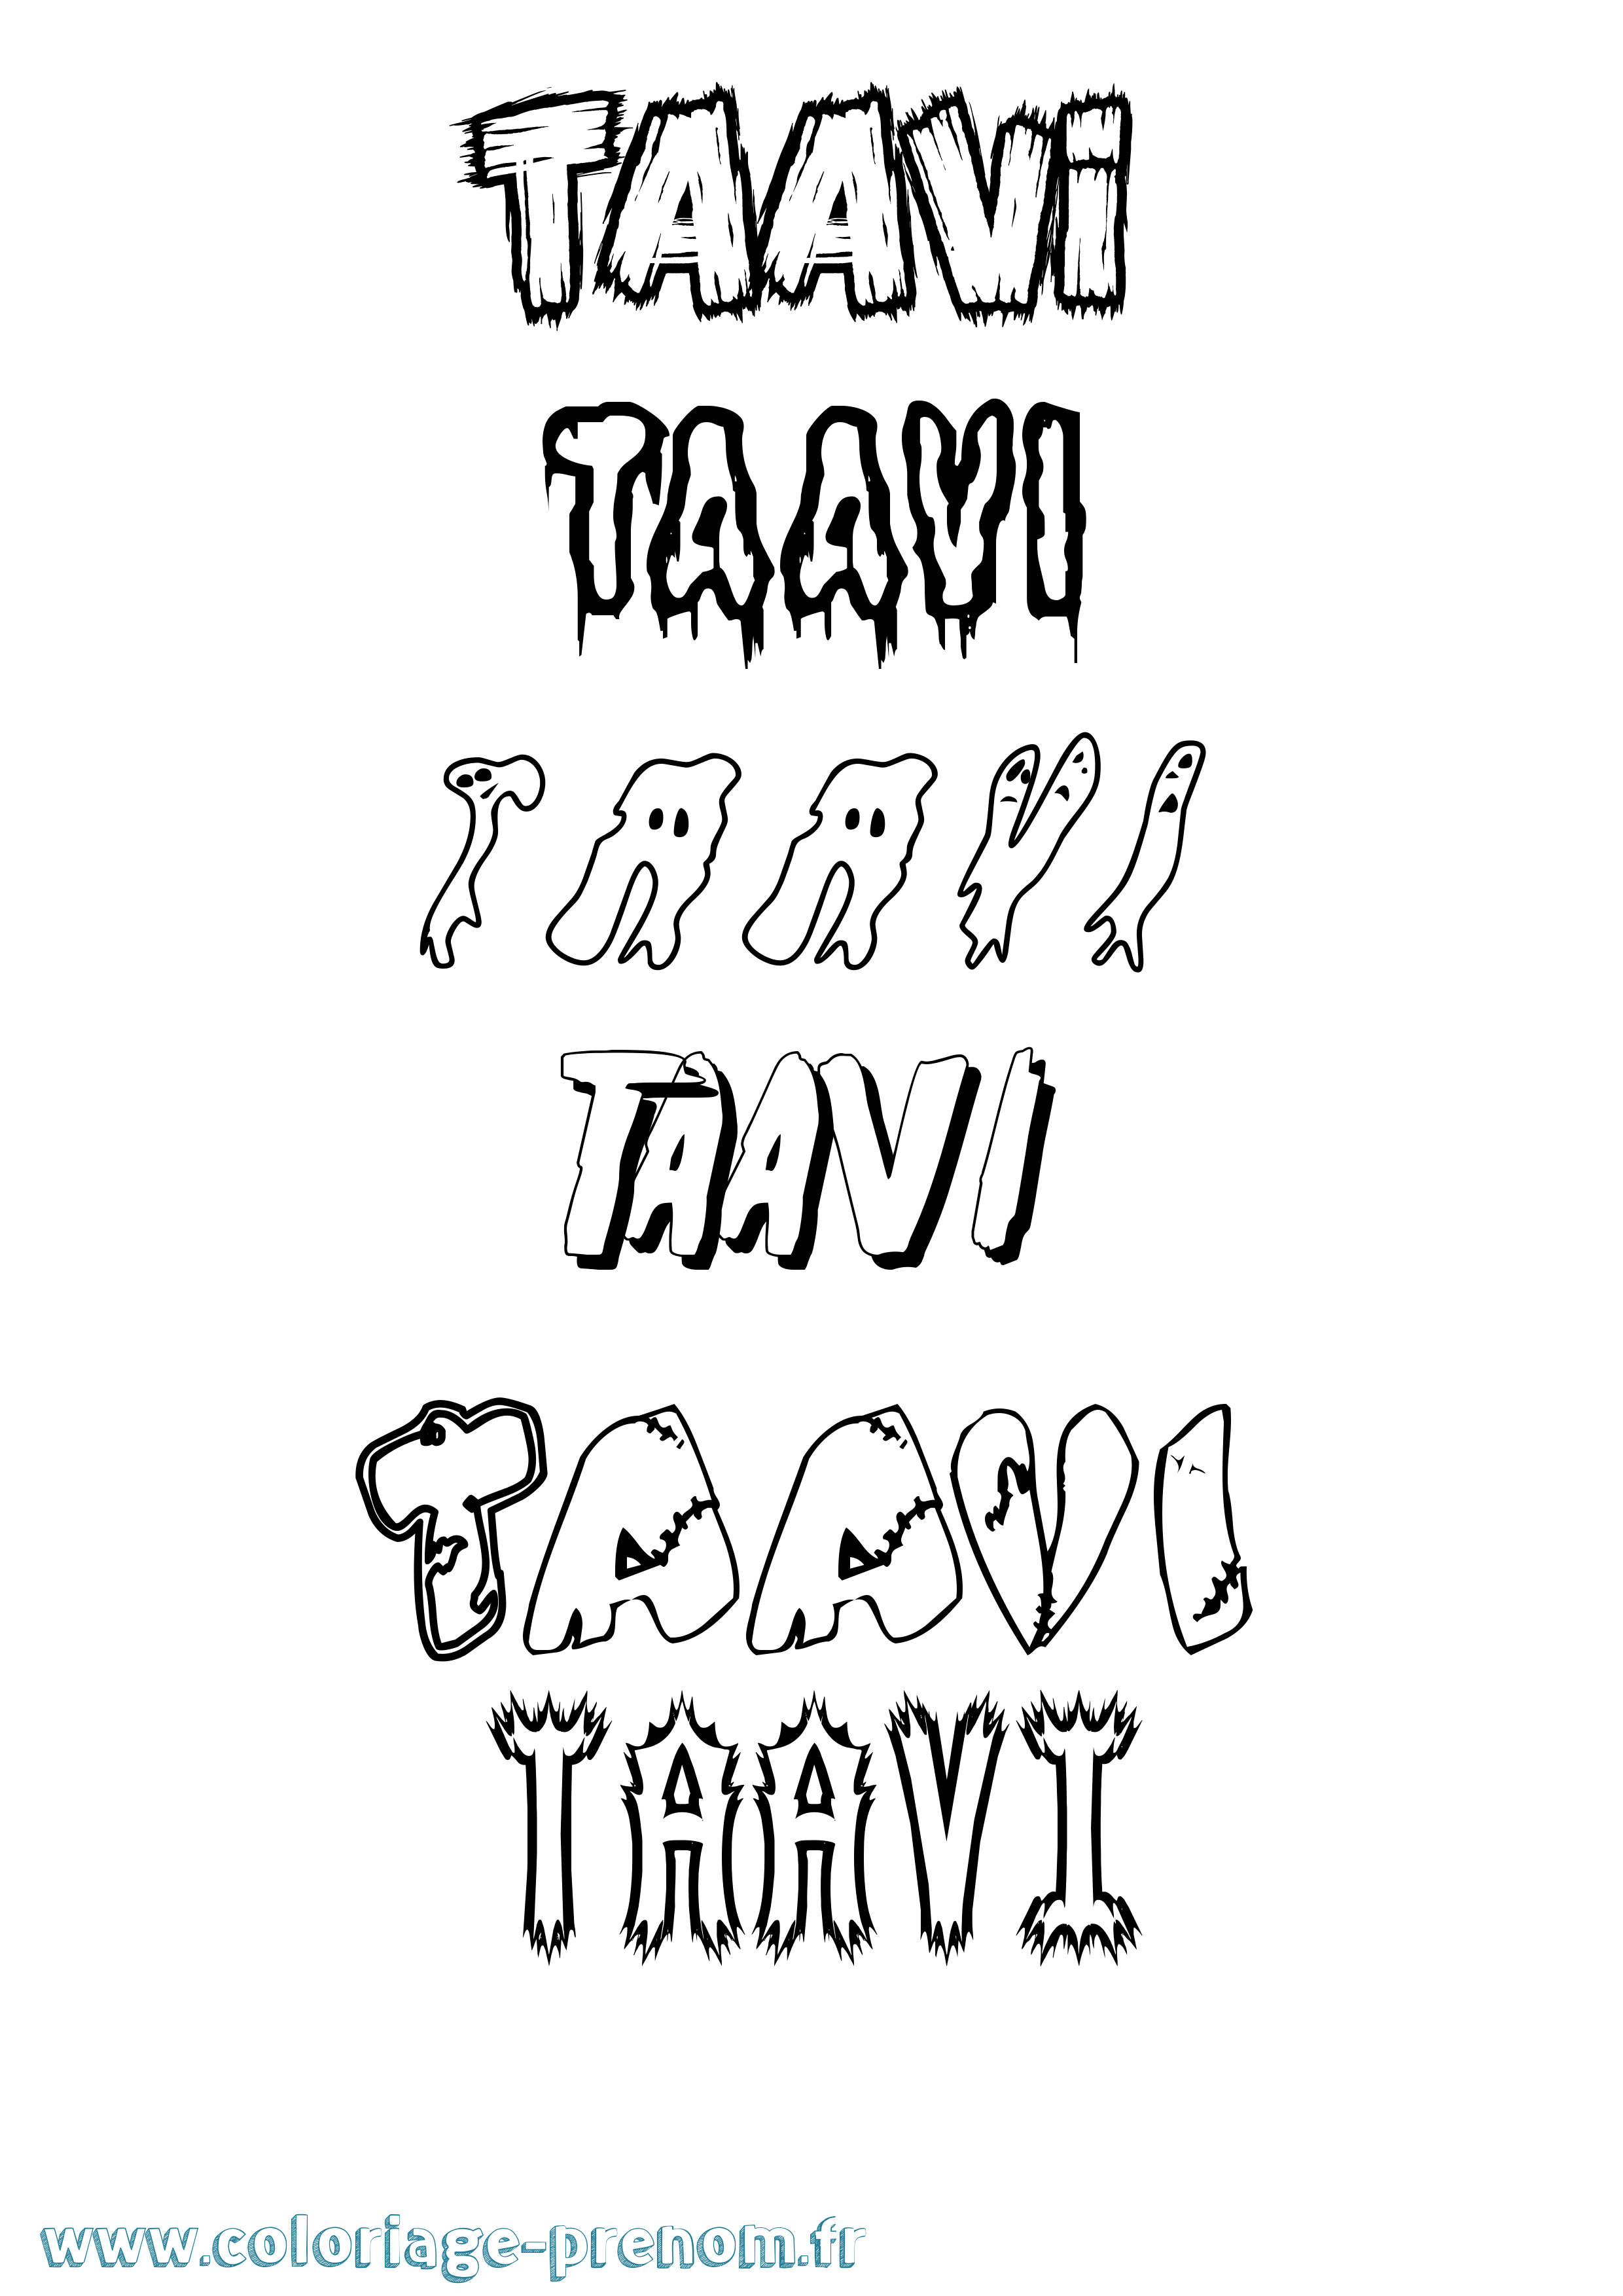 Coloriage prénom Taavi Frisson